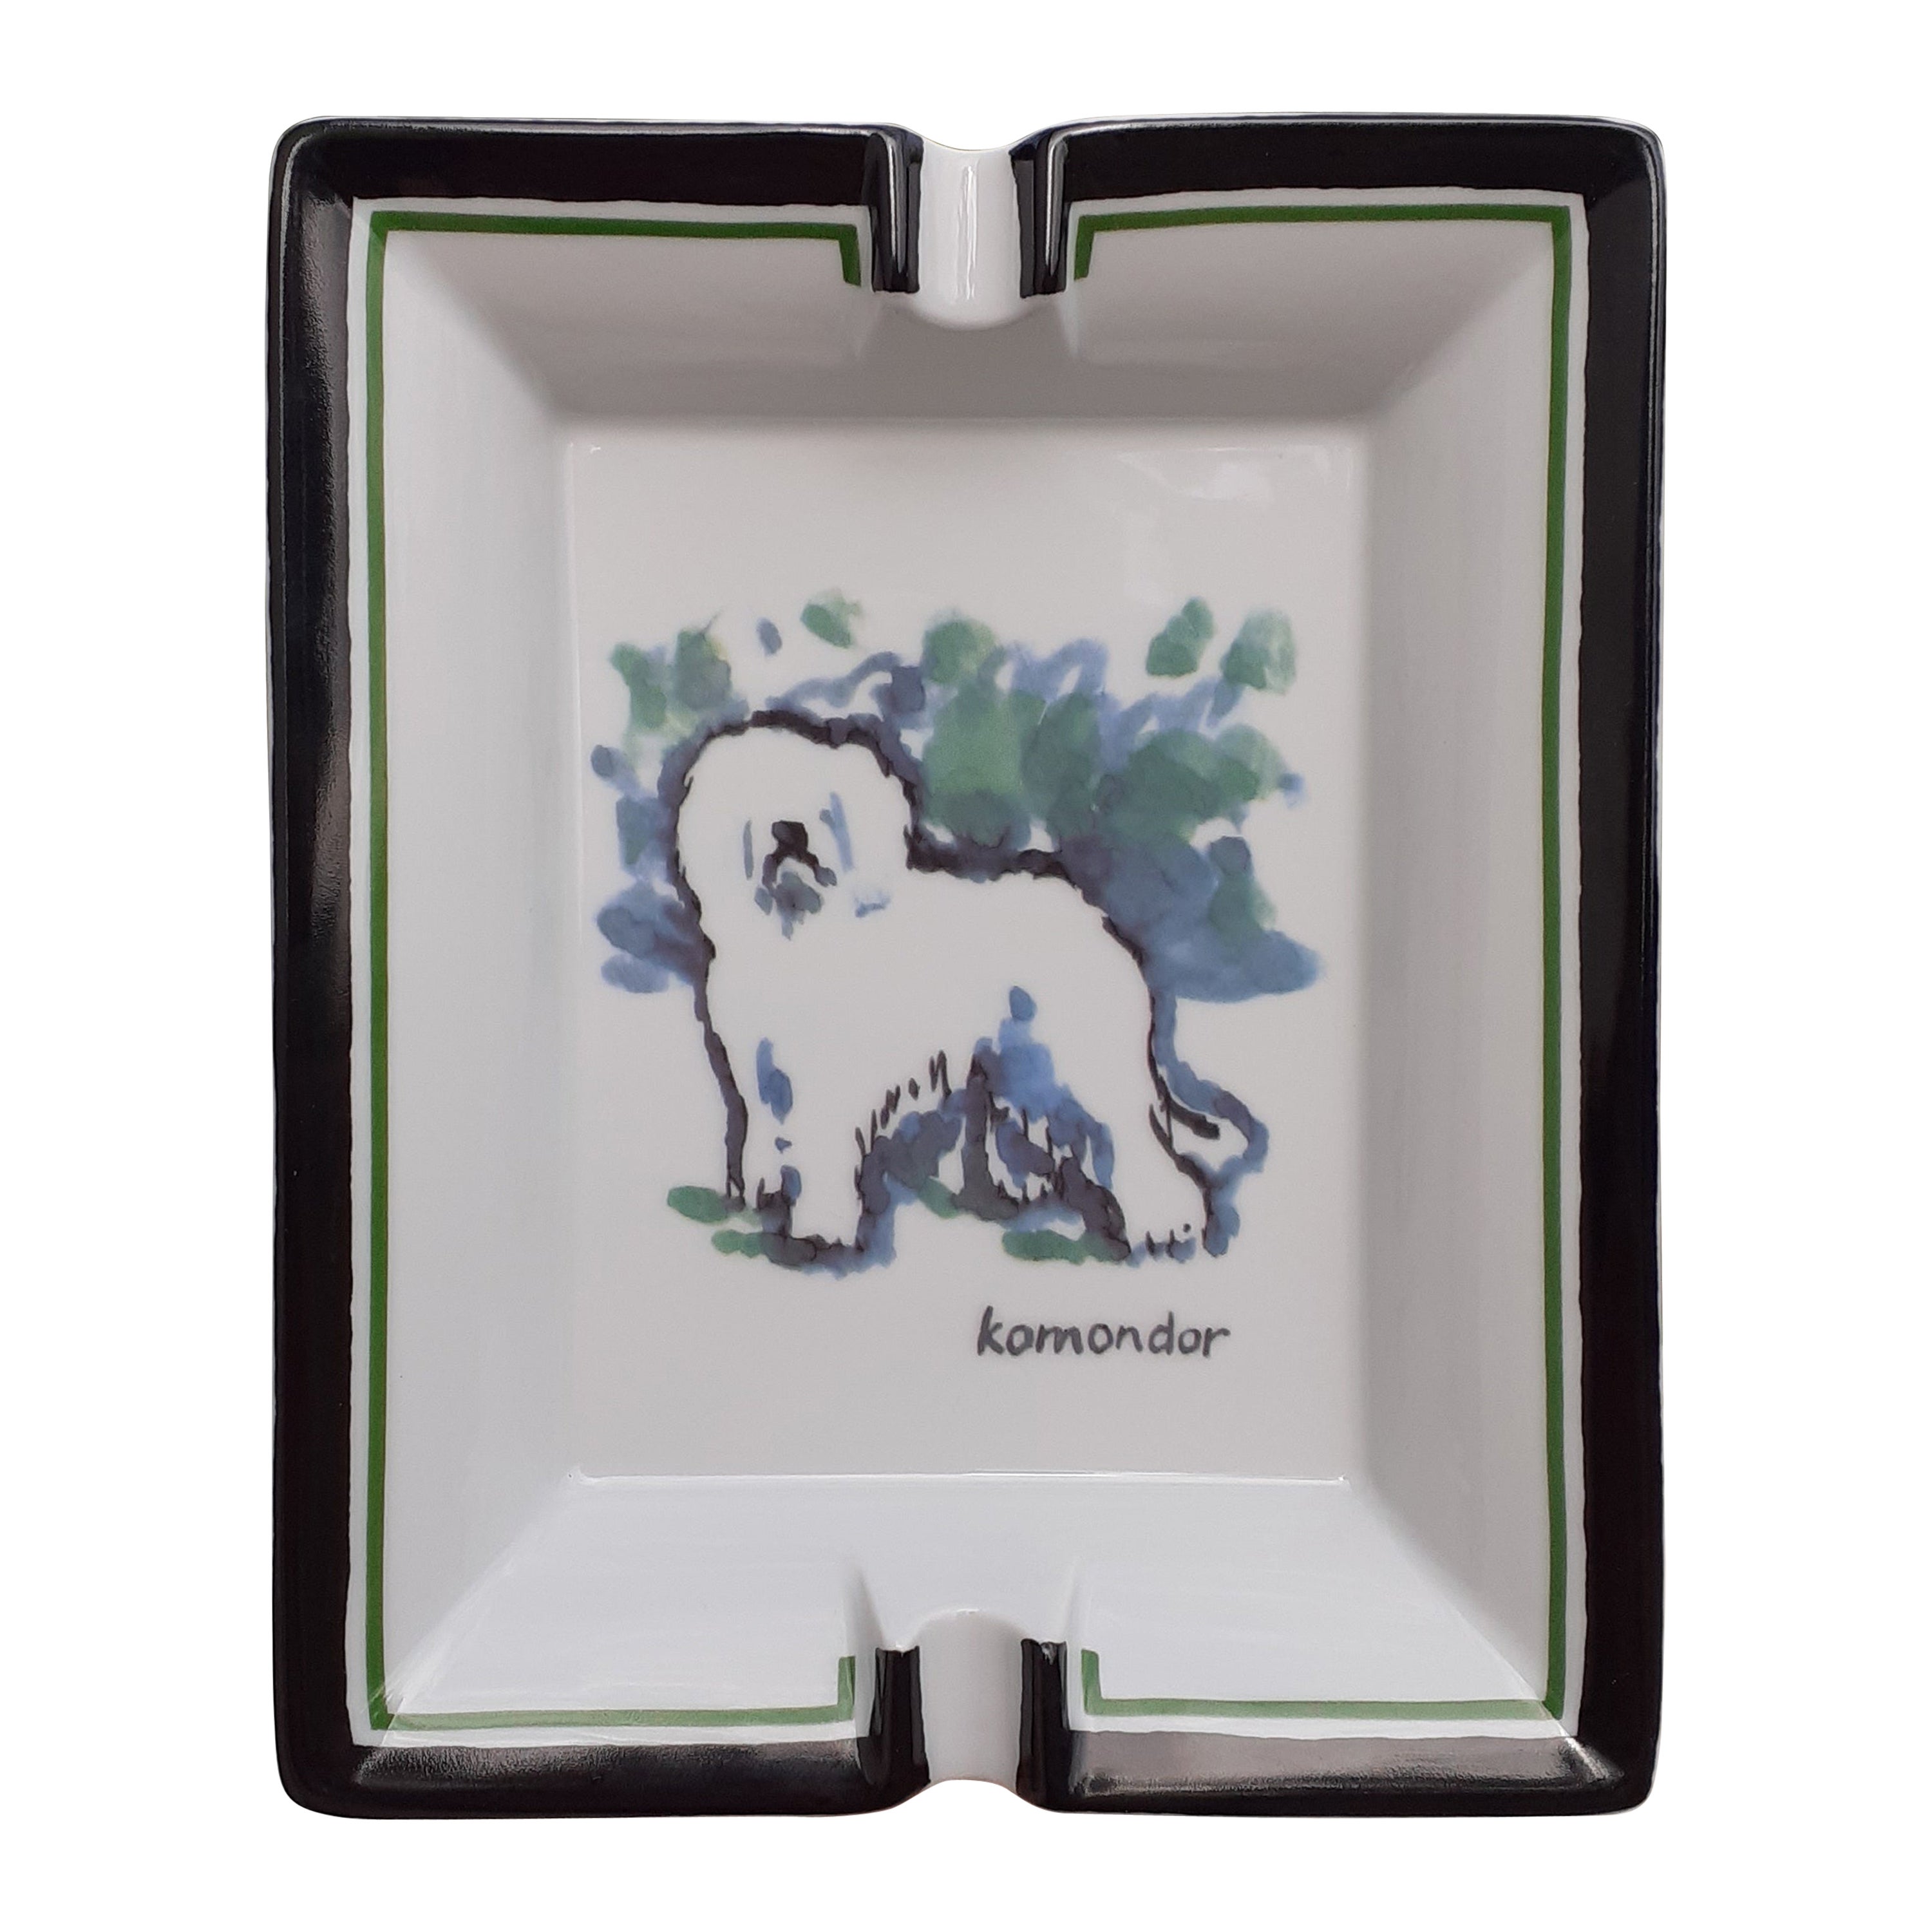 Exceptional Hermès Komondor Dog Print in Porcelain RARE For Sale